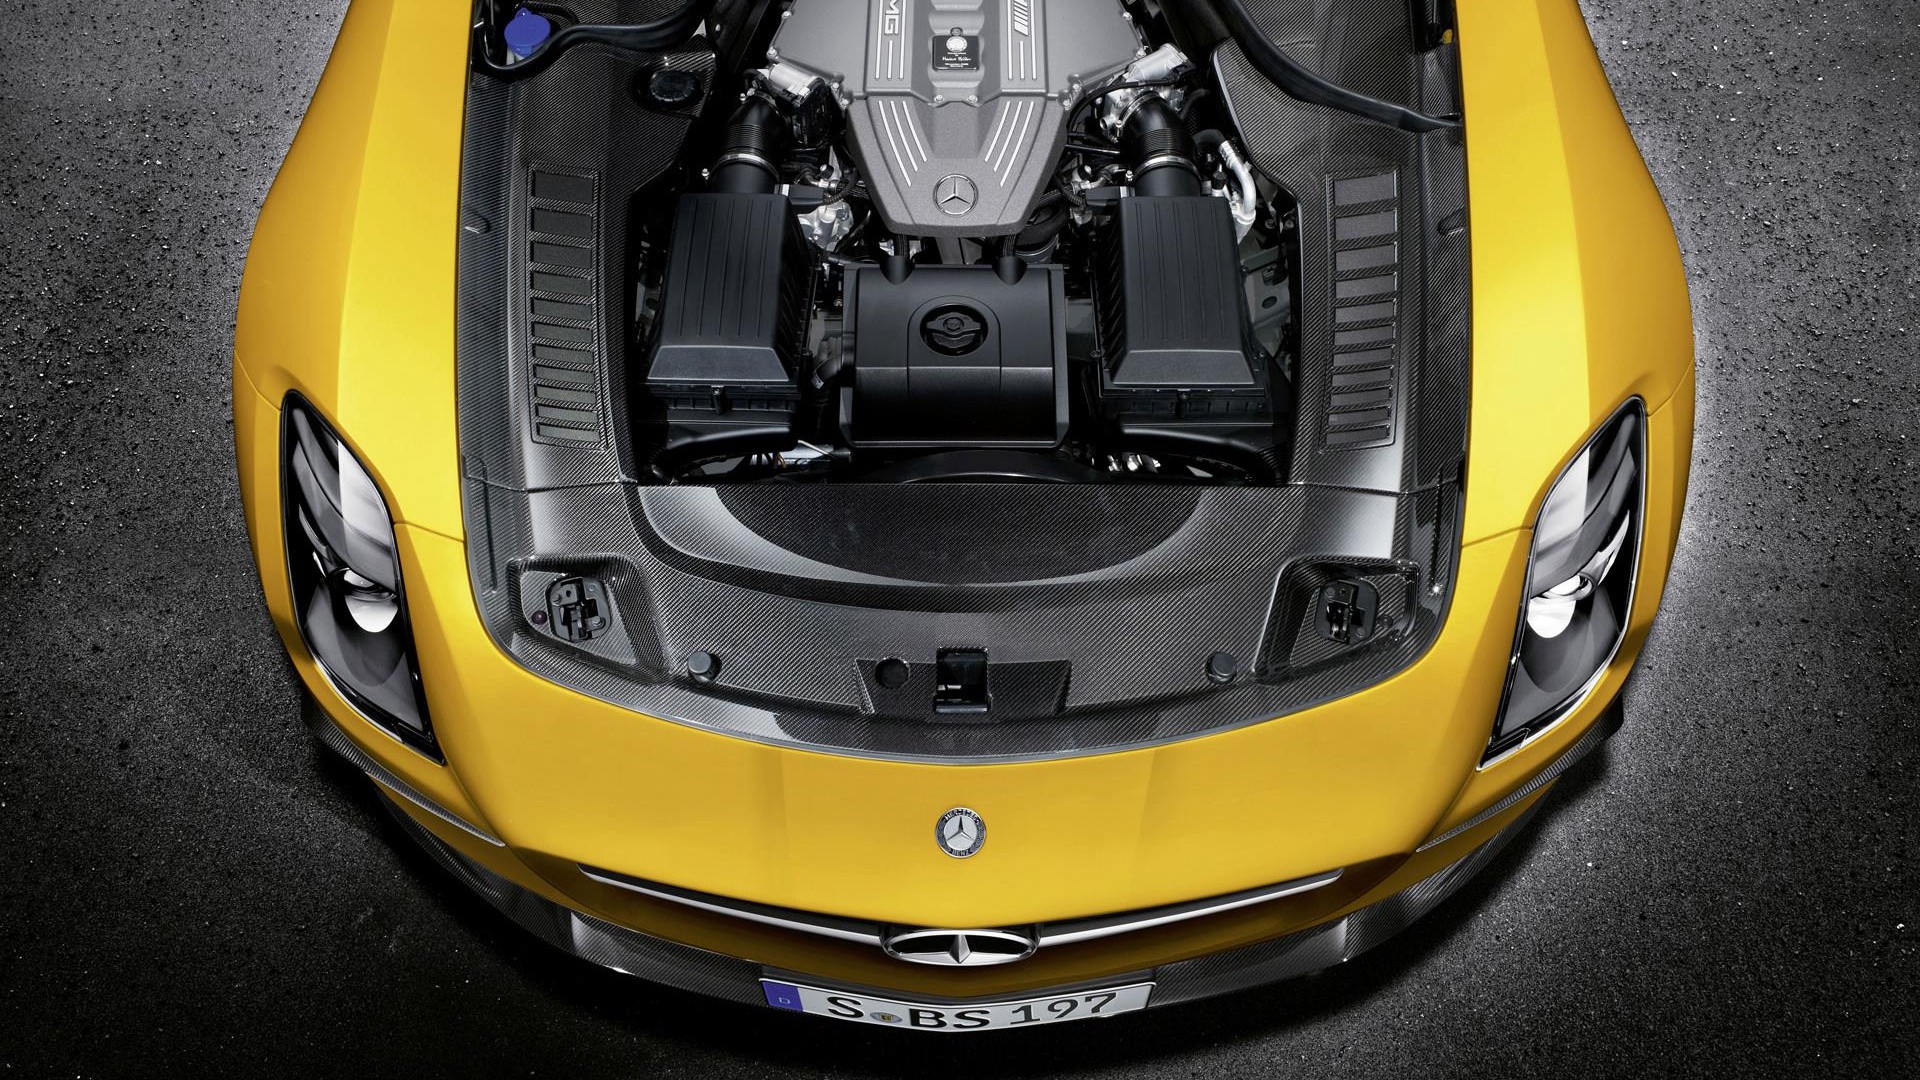 Mercedes Benz Sls Amg Black Series Yellow Engine